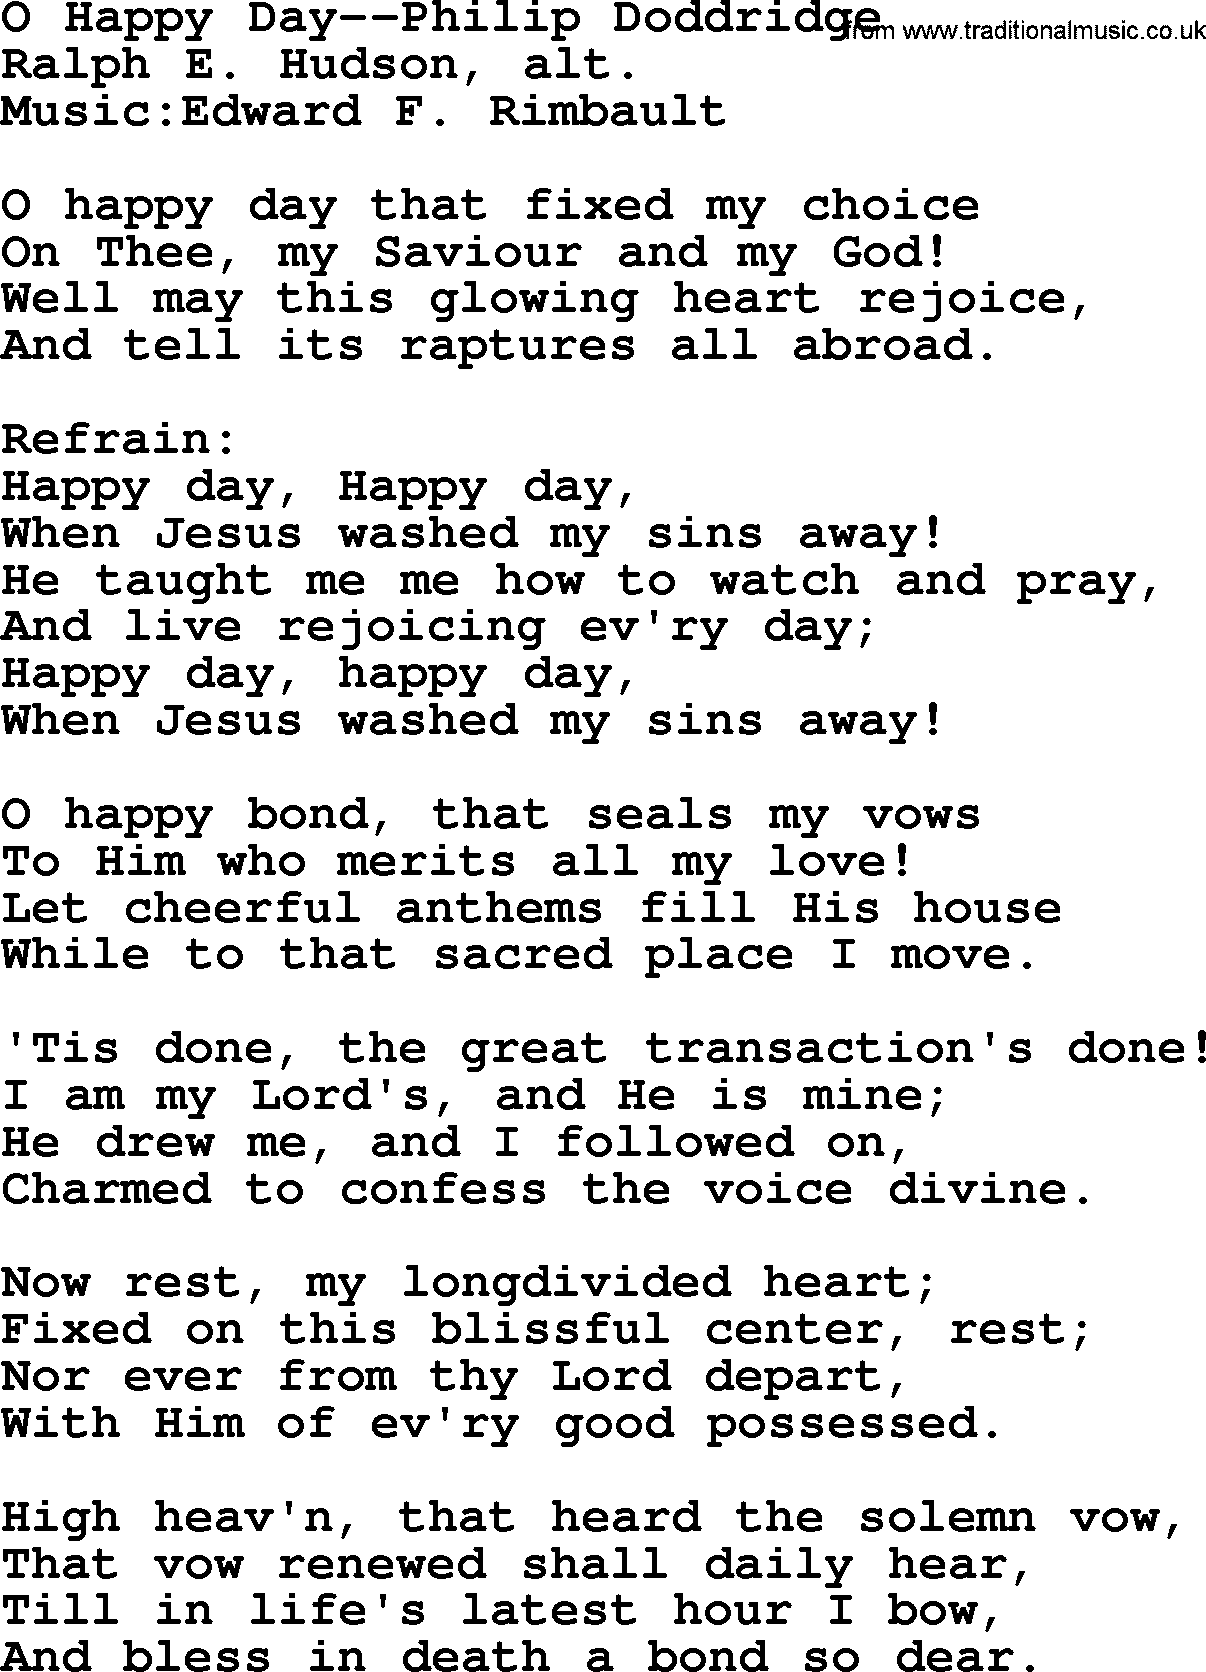 Philip Bliss Song: O Happy Day, lyrics